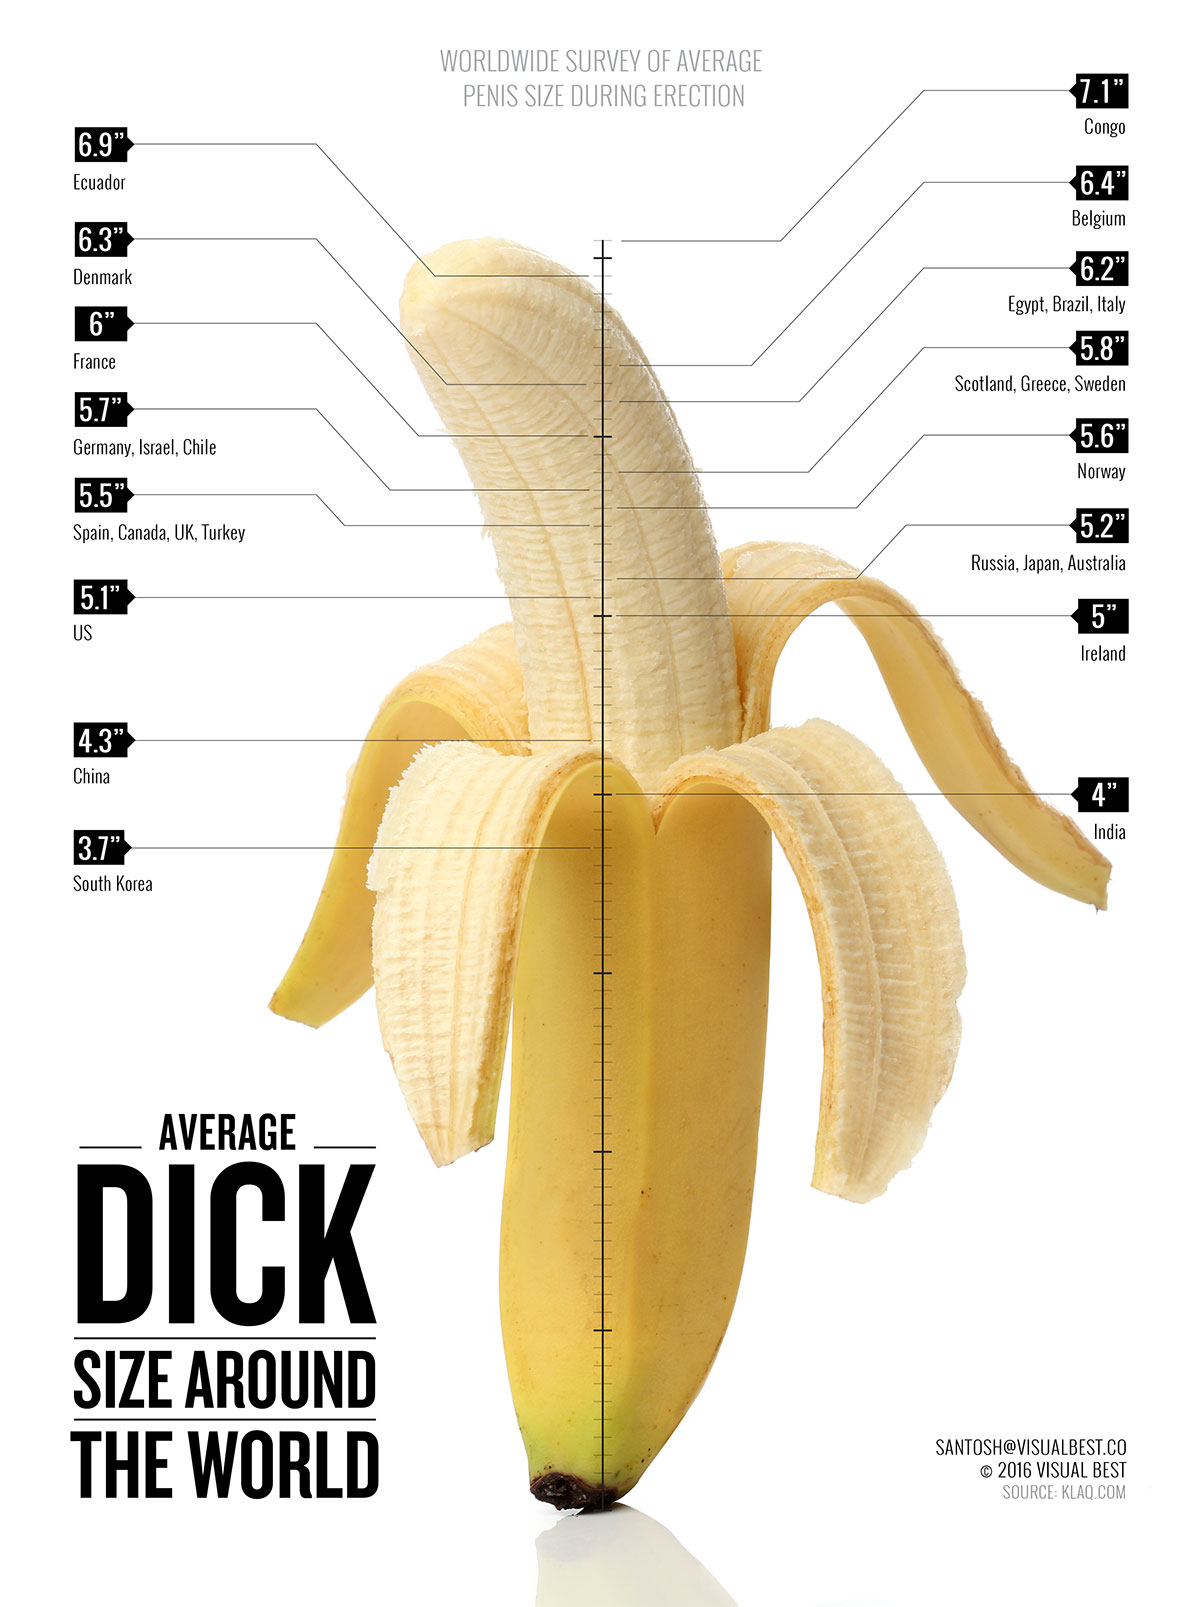 Average porn dick size vs rest of worlfd